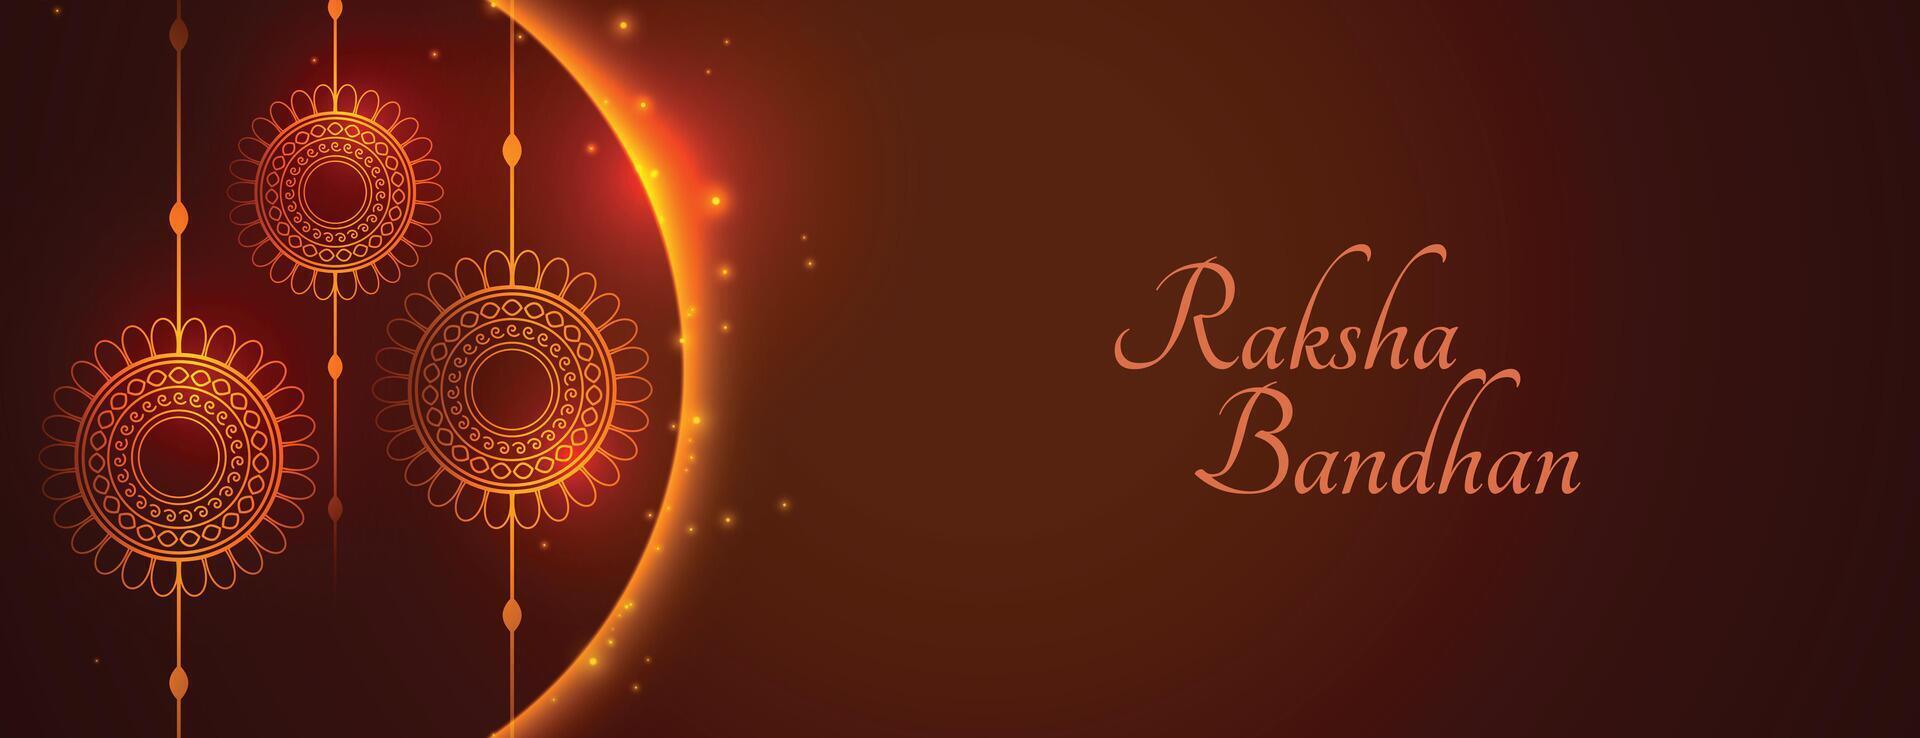 happy raksha bandhan wide banner greeting shiny design vector